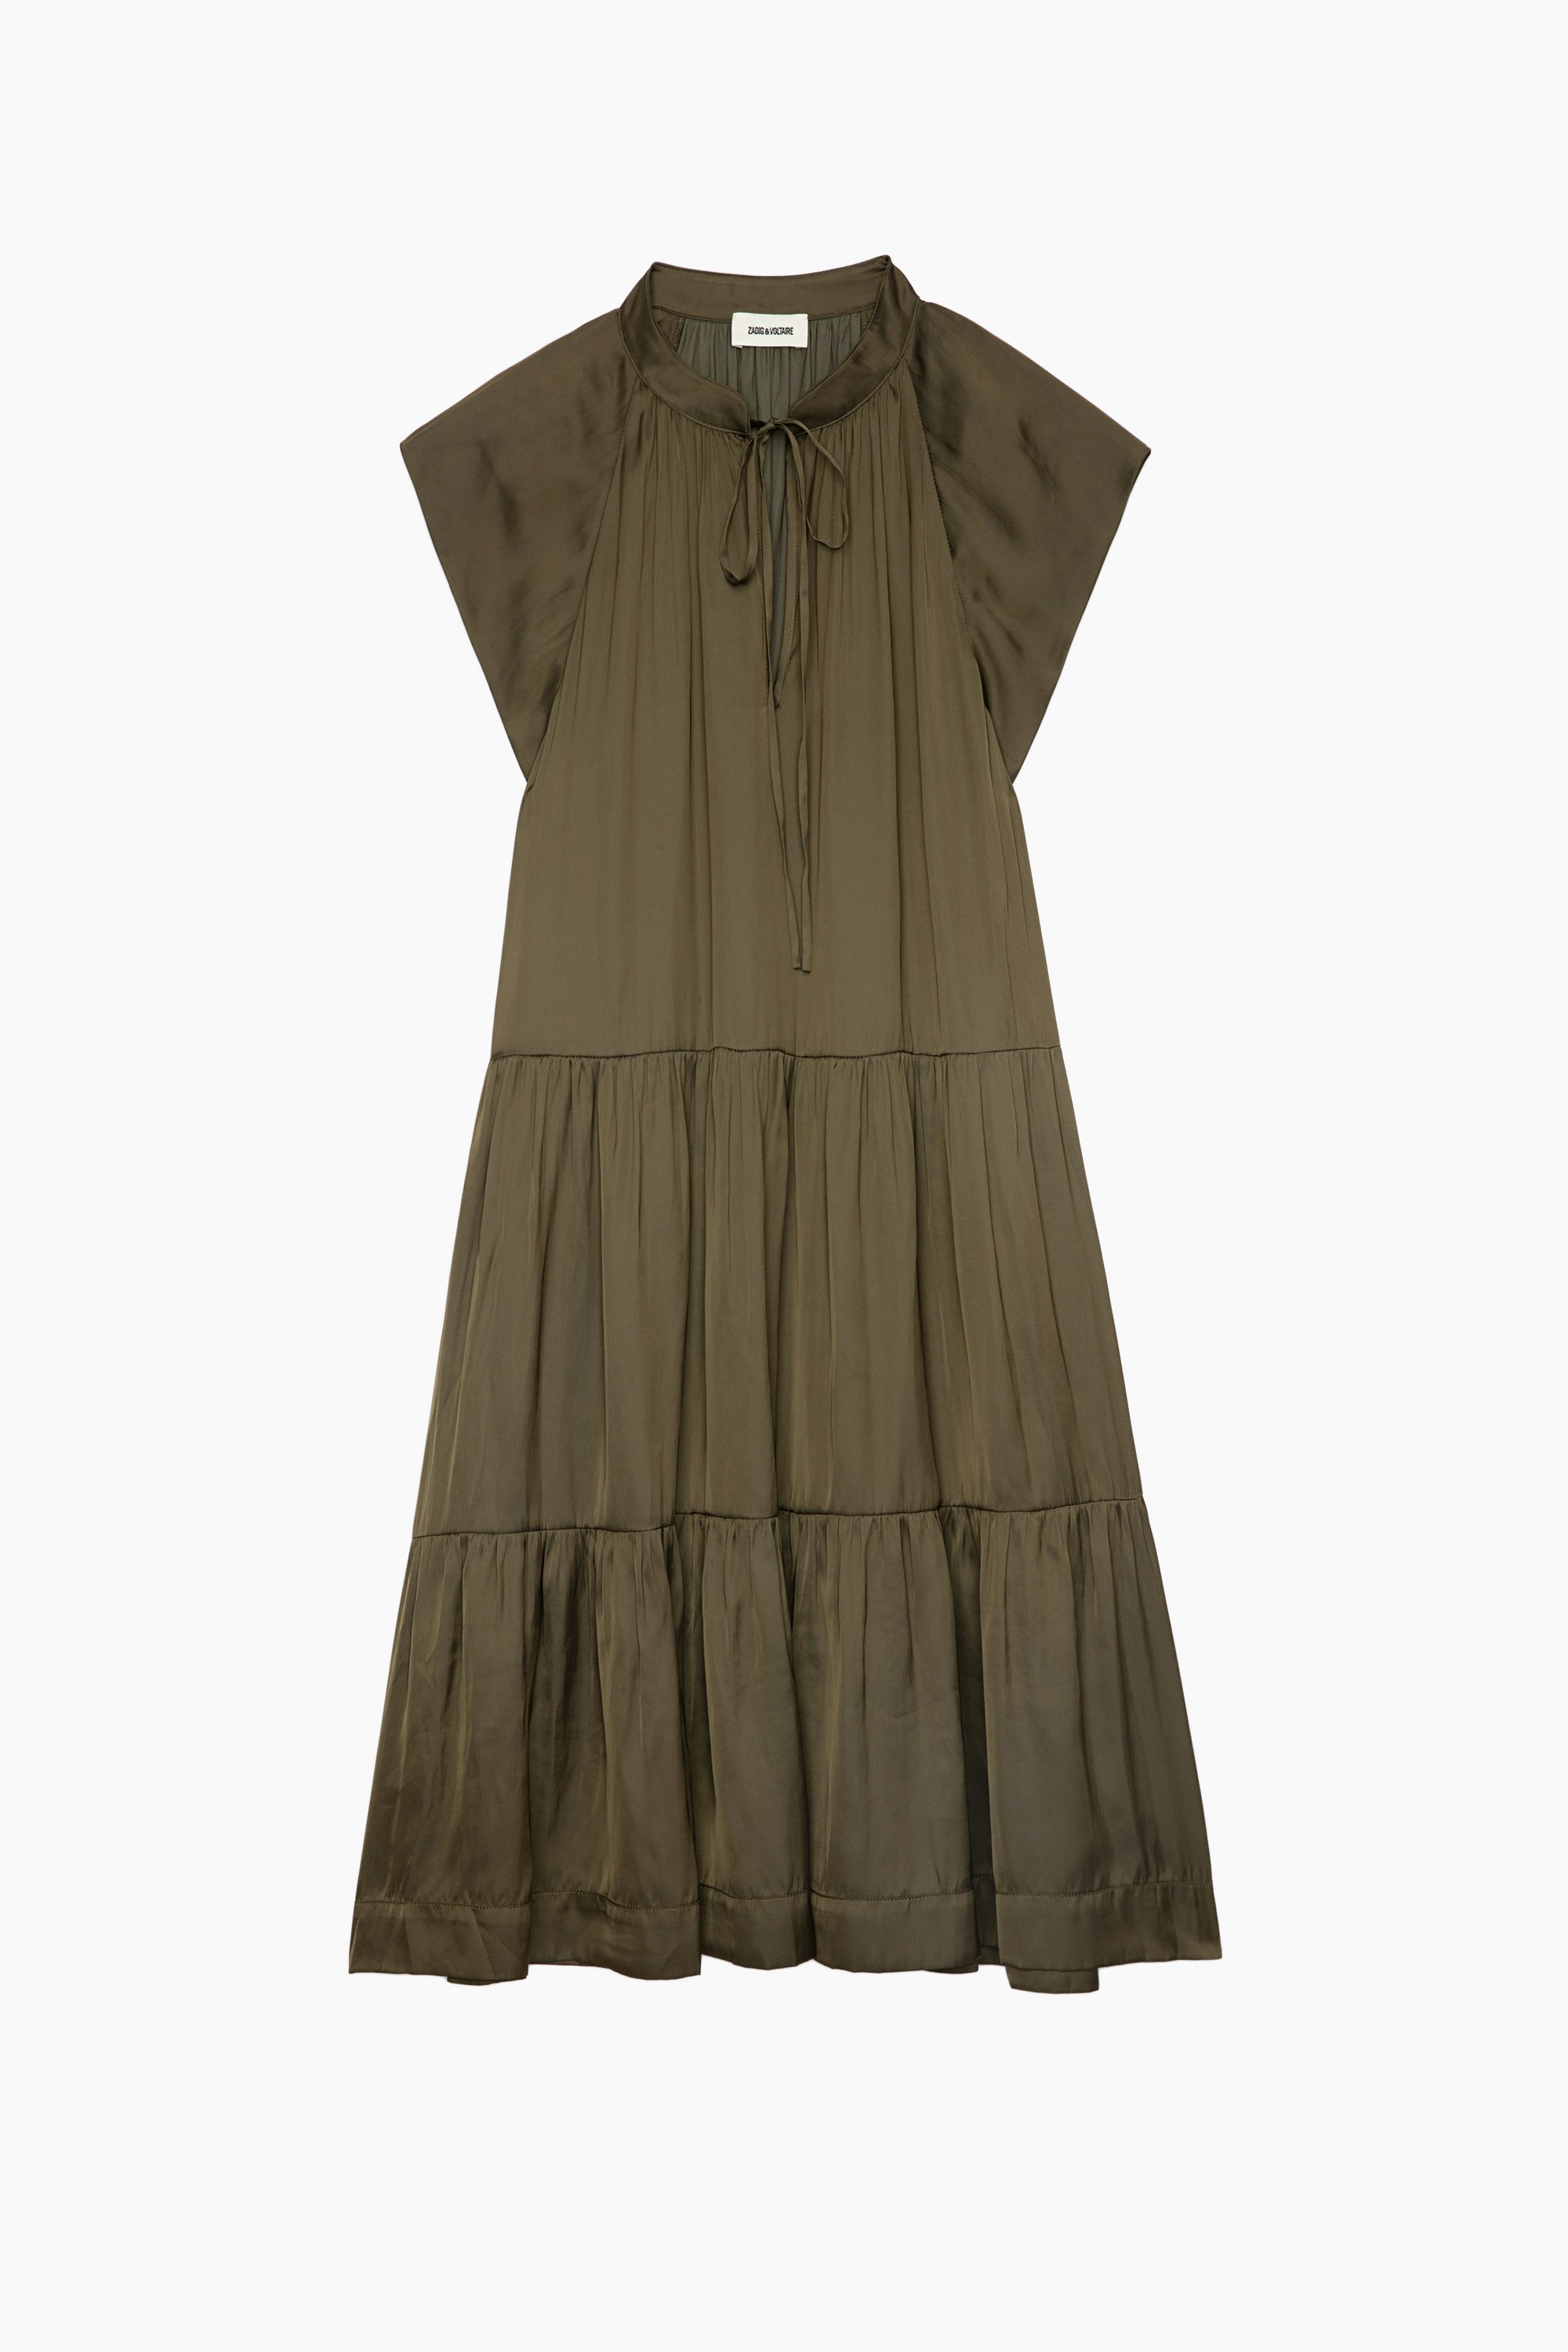 Rito Satin Dress Women's short dress in khaki satin with short sleeves and ruffles